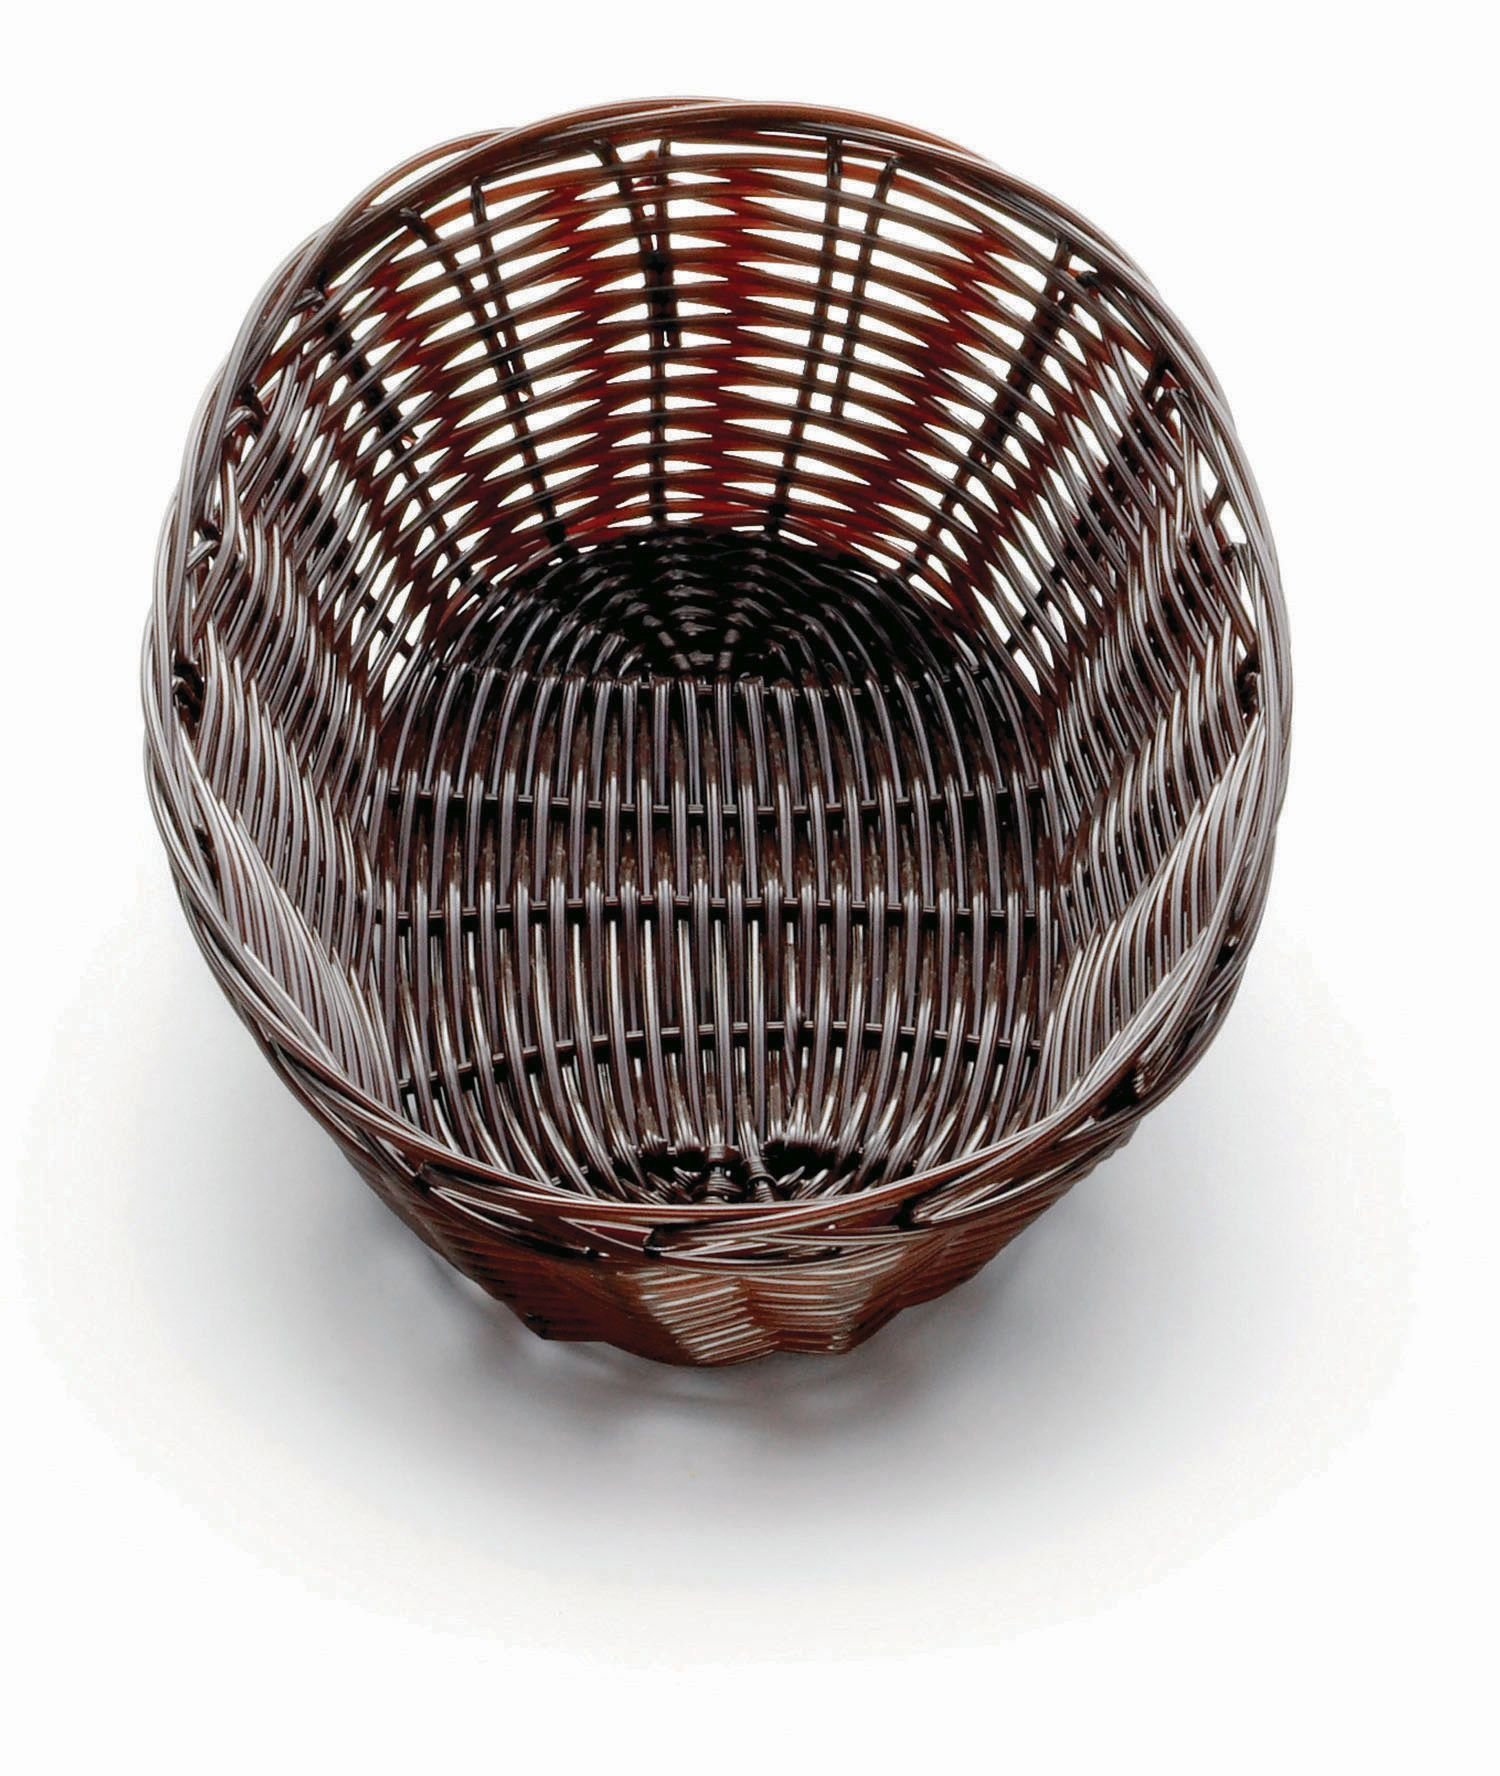 Tablecraft Handwoven Oval Basket 10x6.1/2x3", Brown